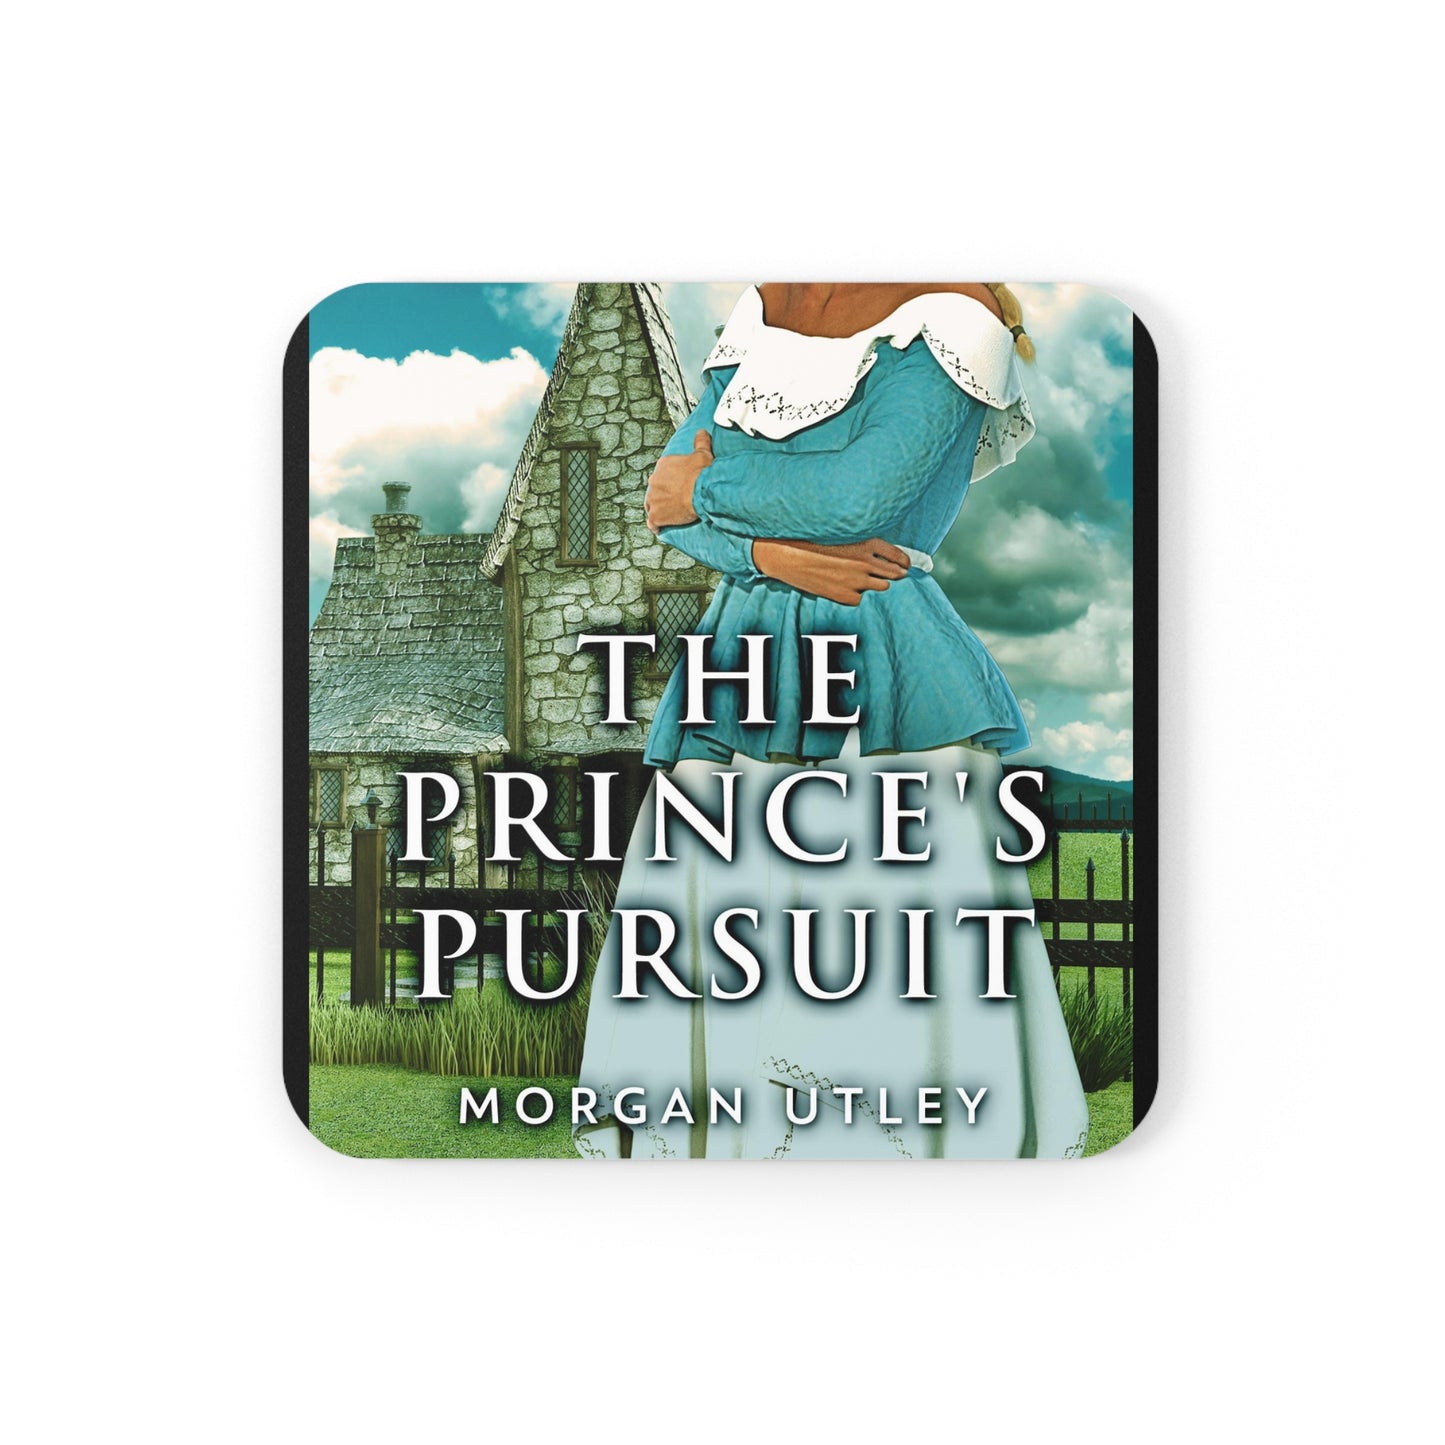 The Prince's Pursuit - Corkwood Coaster Set